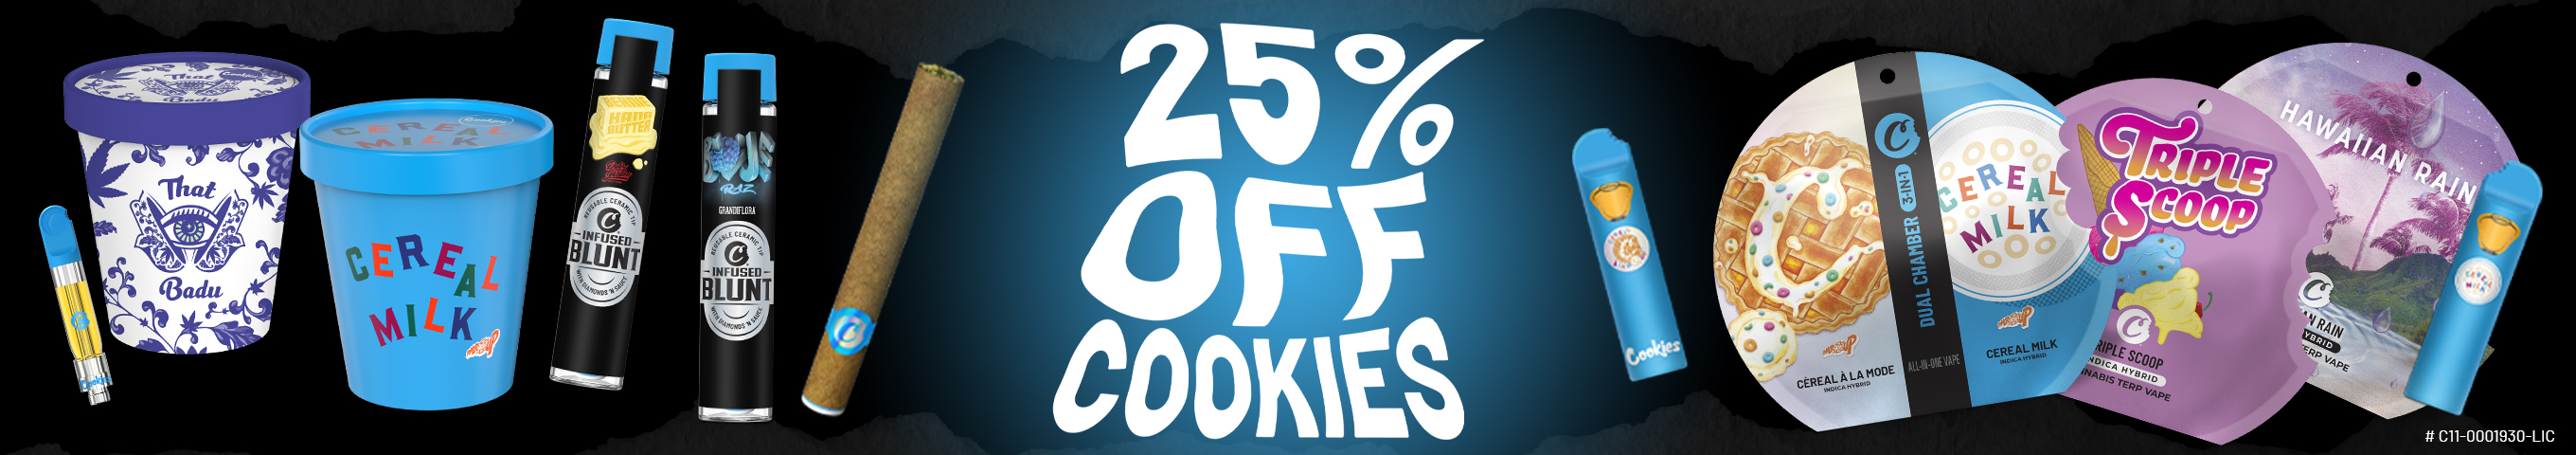 Cannabis Promo, Cannabis Sales, Cannabis Discounts, Cannabis on Sale, 25% off Cookies